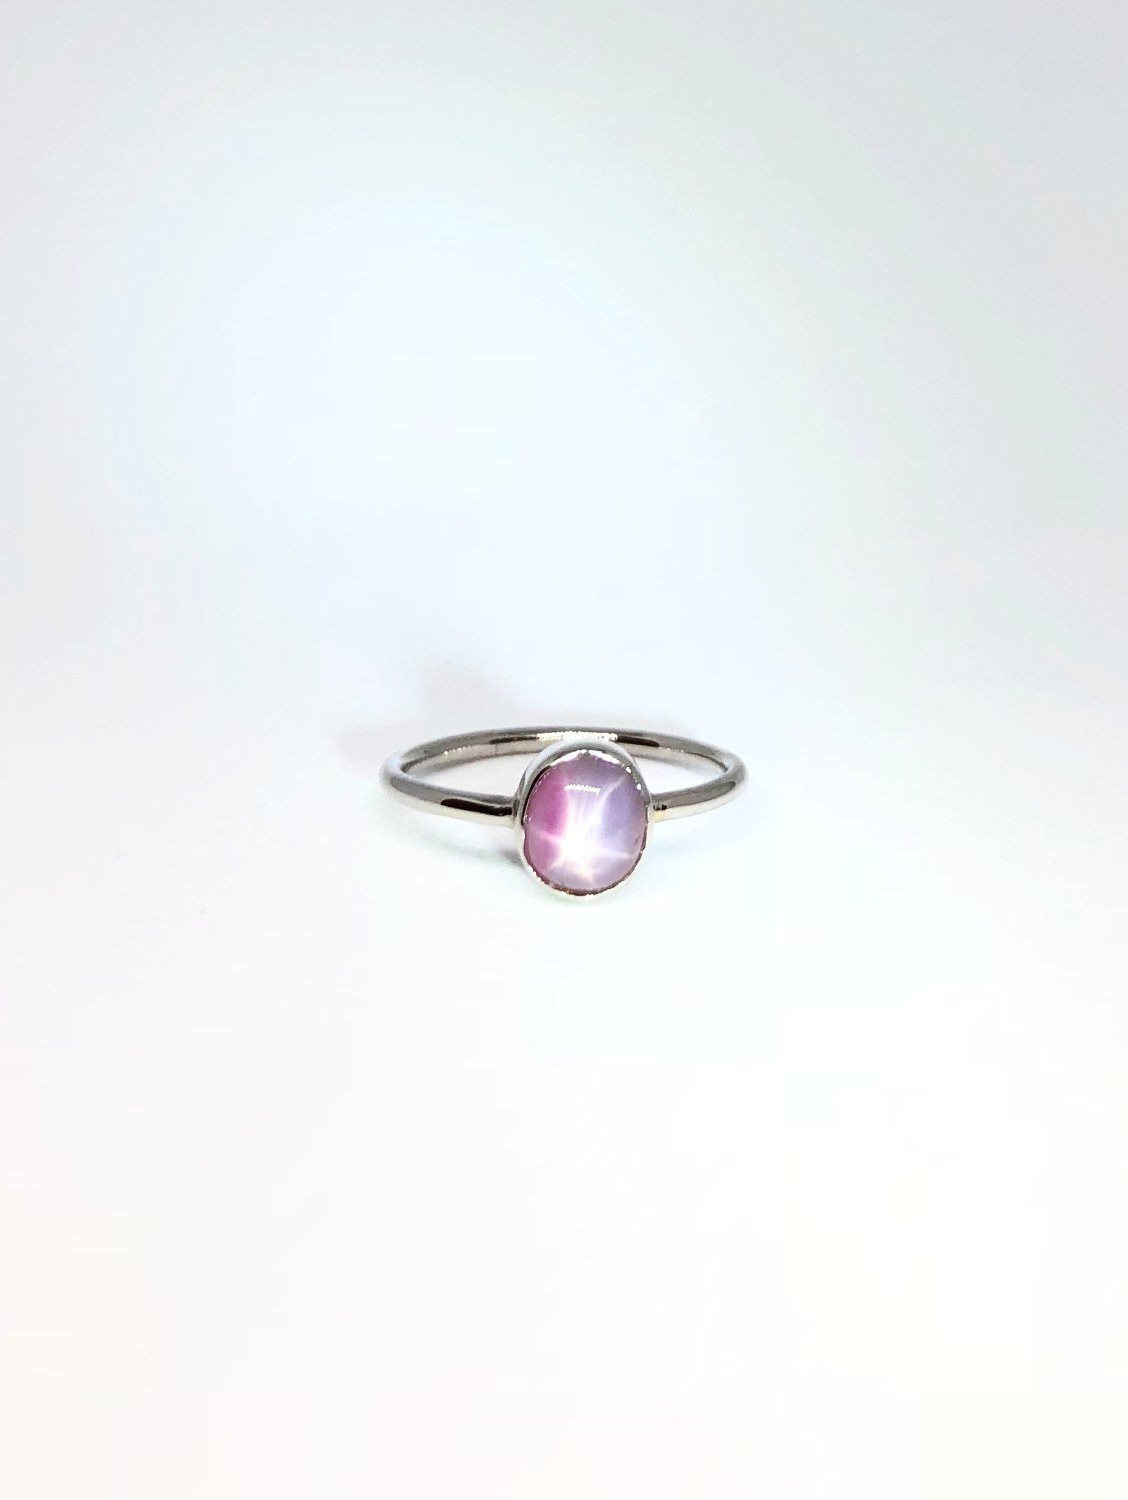 10K White Gold Vintage Pink Star Sapphire Ring Size 5.25 US | Etsy | Star  sapphire ring, White gold, White gold rings